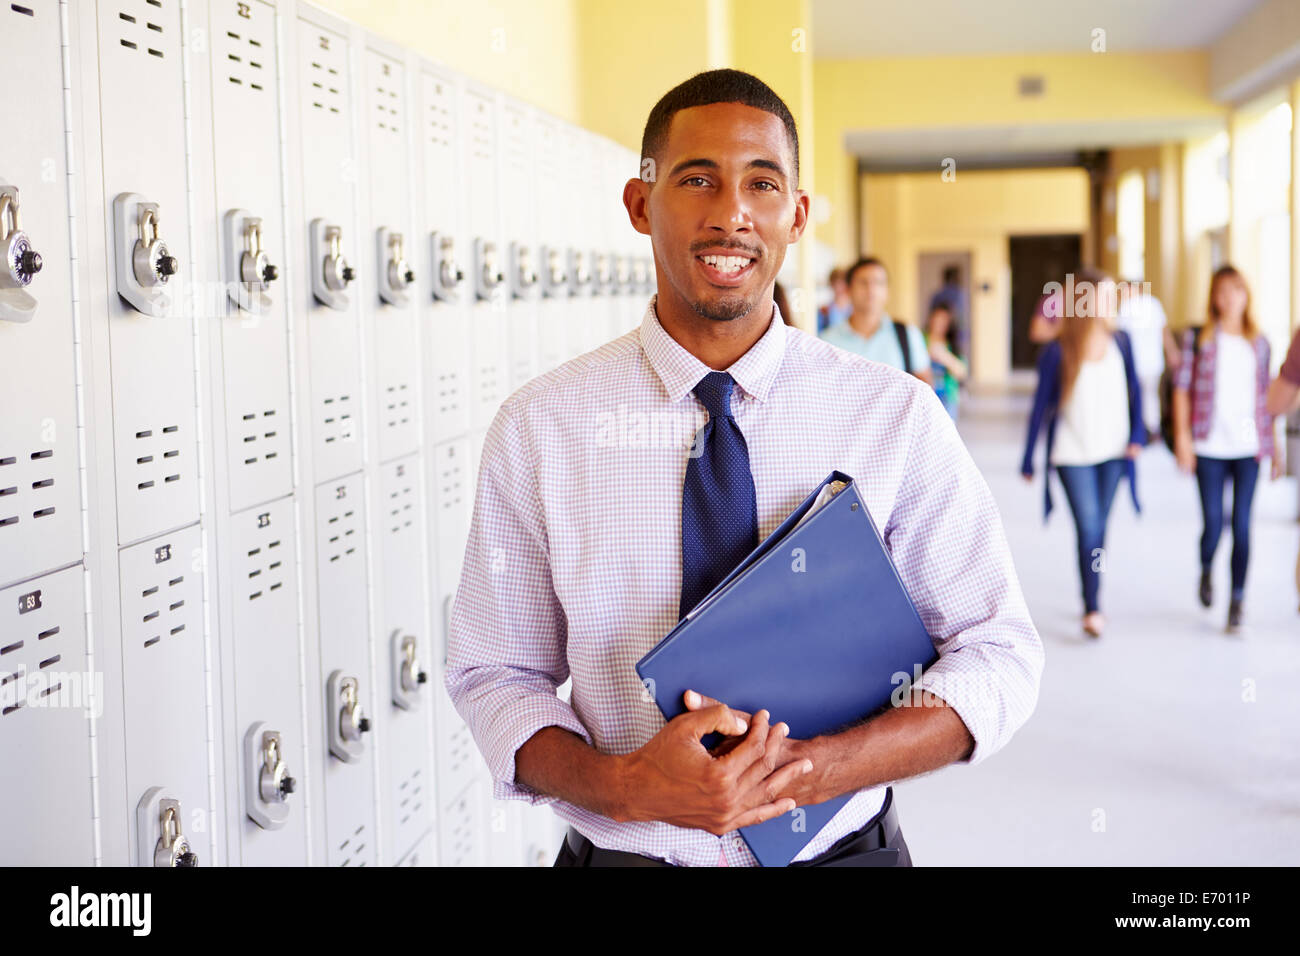 Male High School Teacher Standing By Lockers Stock Photo